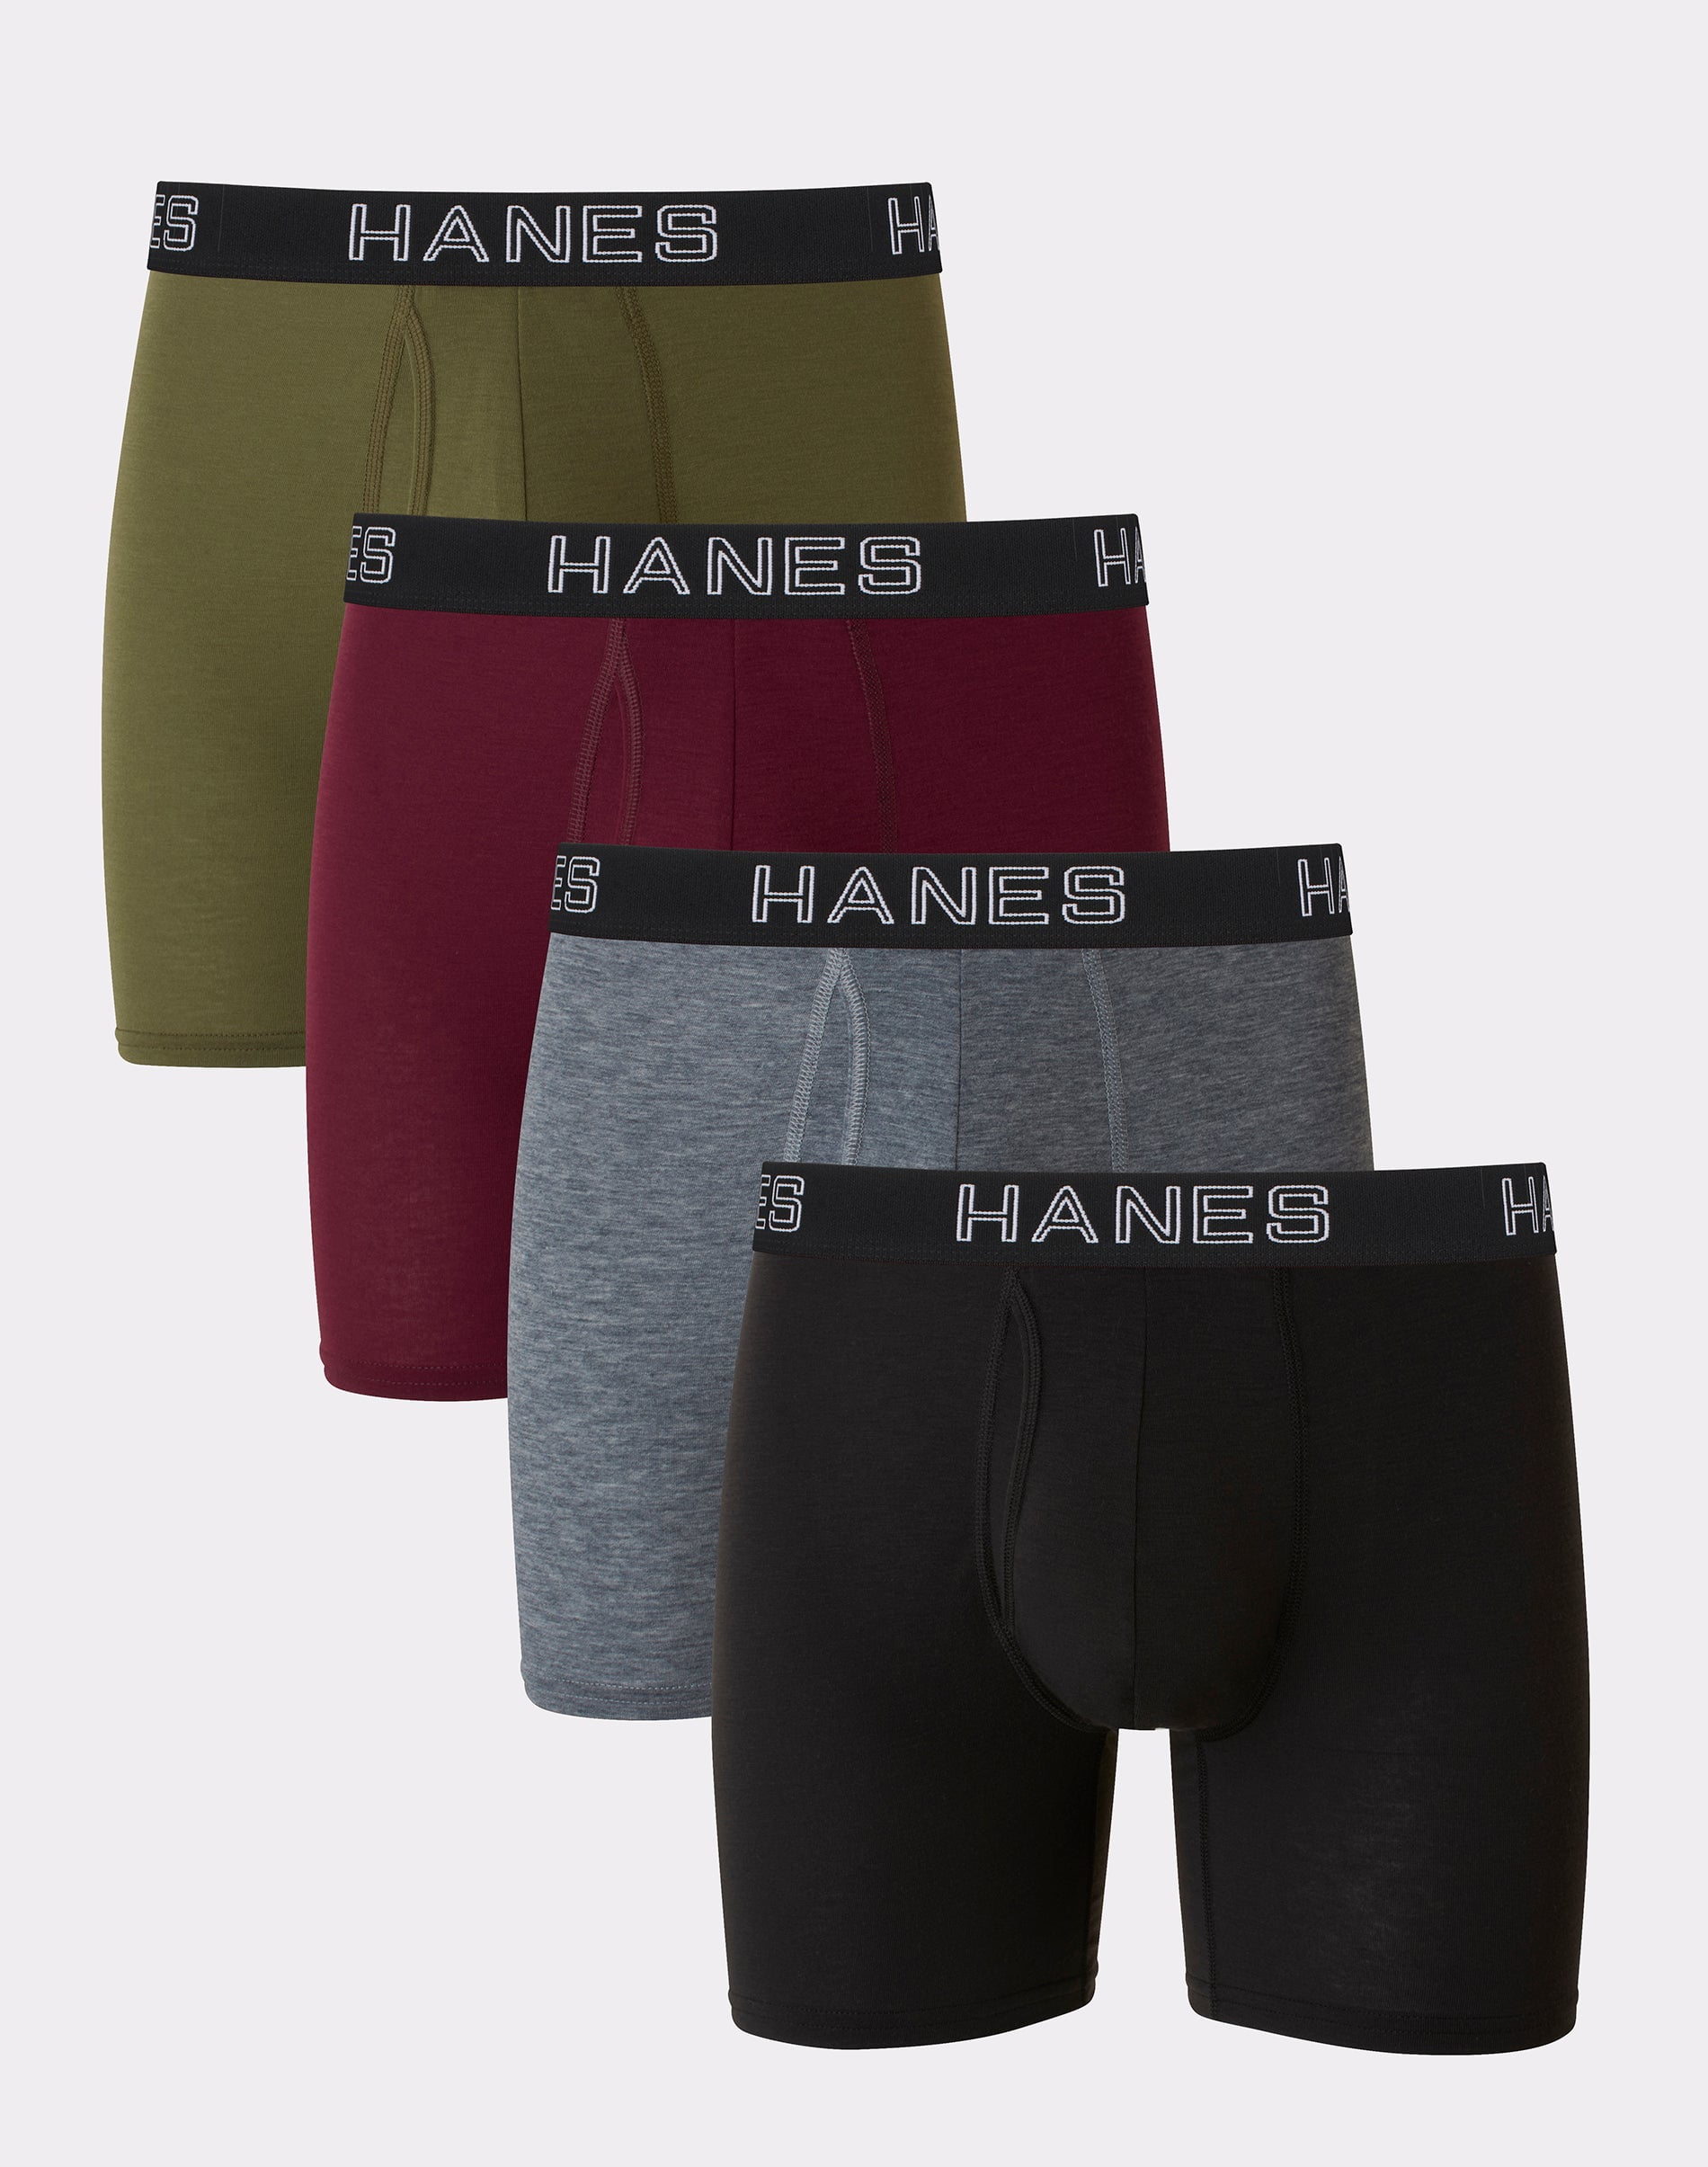 Hanes Men's Black/Grey Boxer Briefs, 3 Pack 